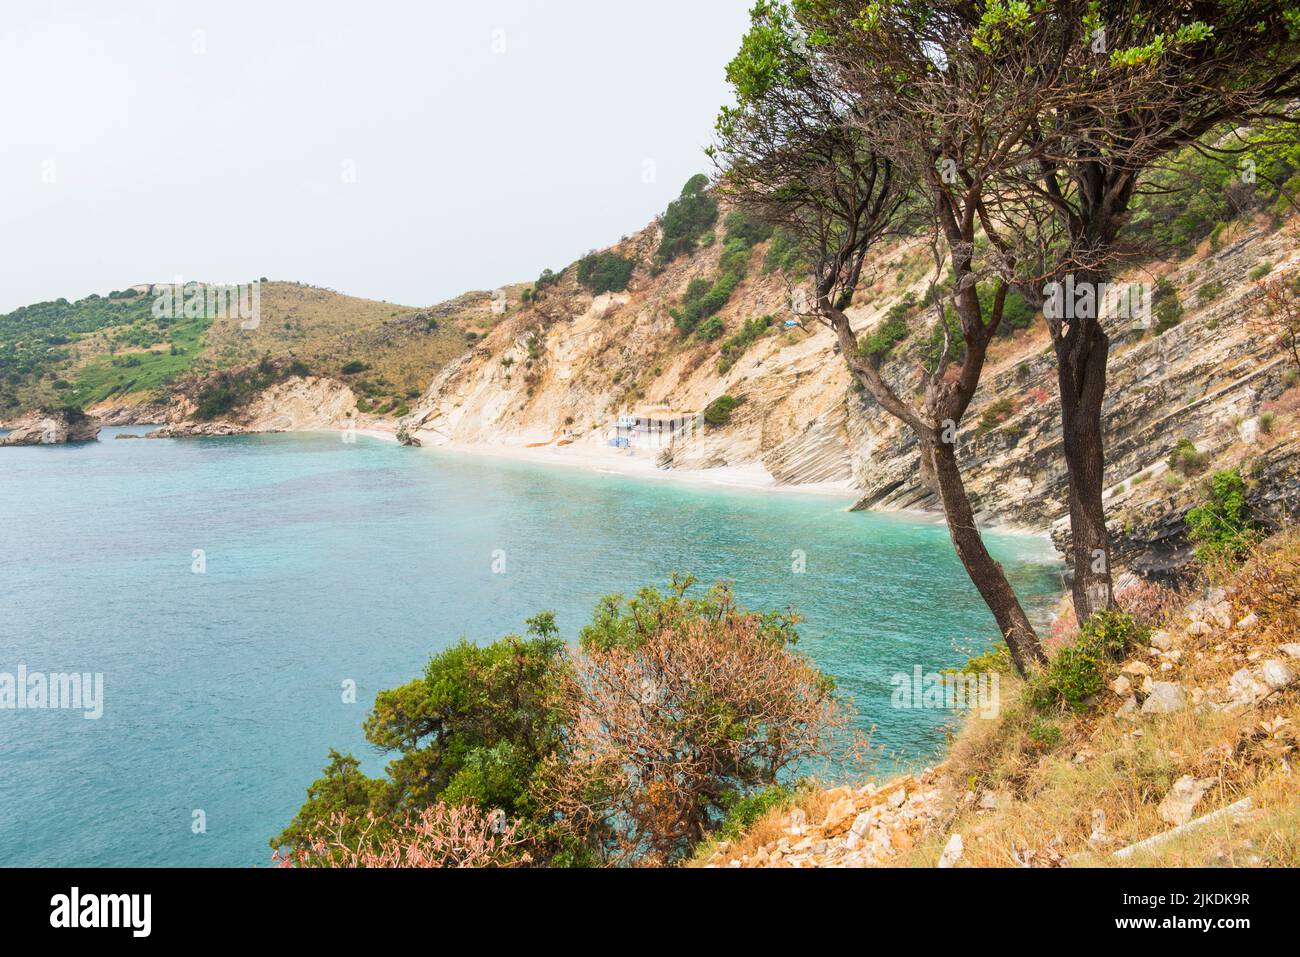 Ionian Coast Cove in der Nähe von Saranda , Südalbanien, Südeuropa. Stockfoto